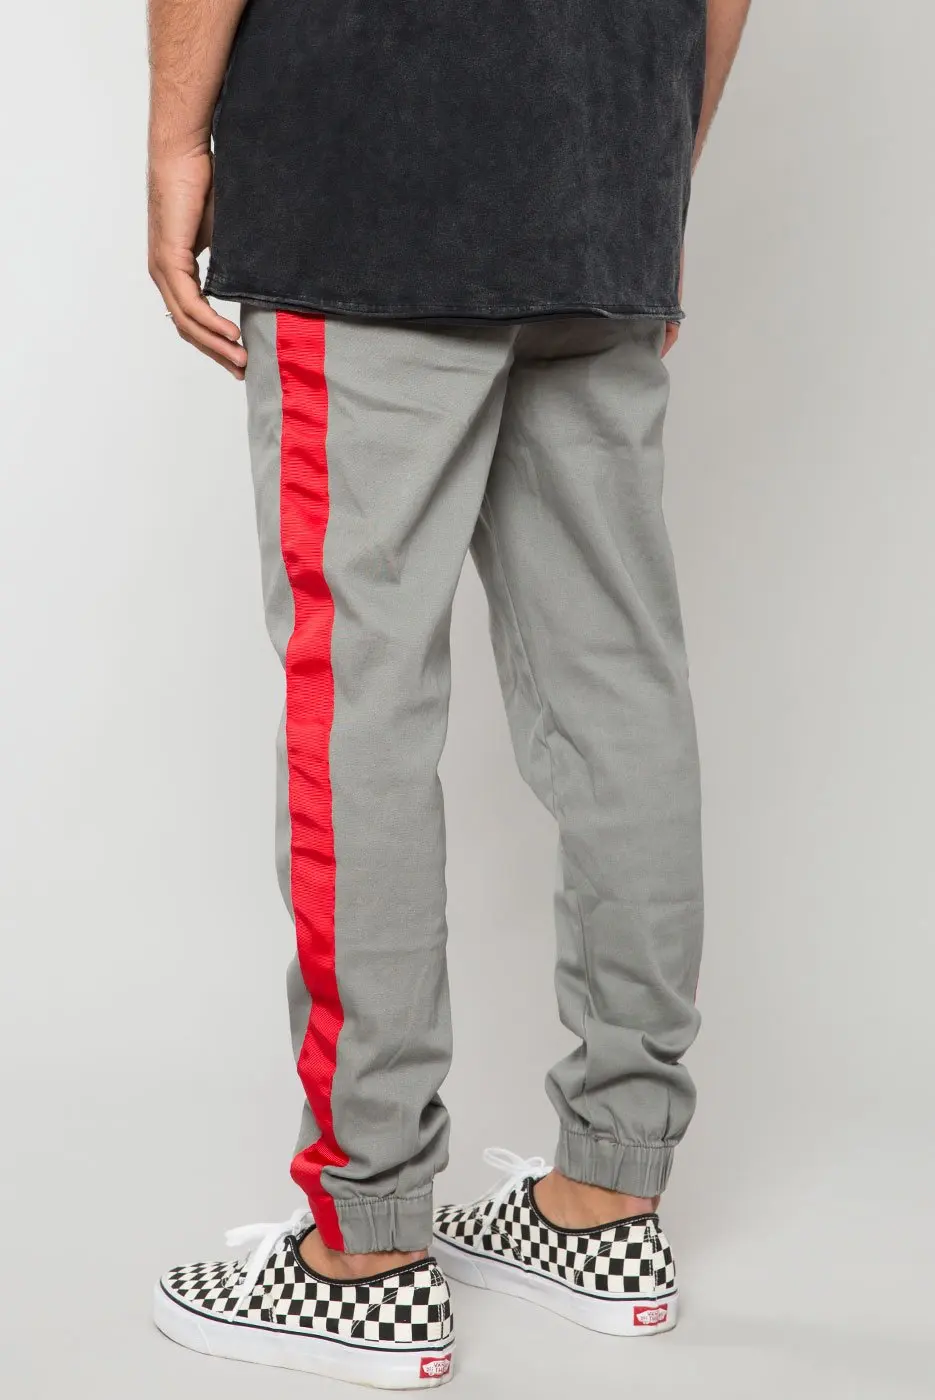 Wholesale Custom Zipper Pocket 100% Polyester Men Jgger Pants - Buy